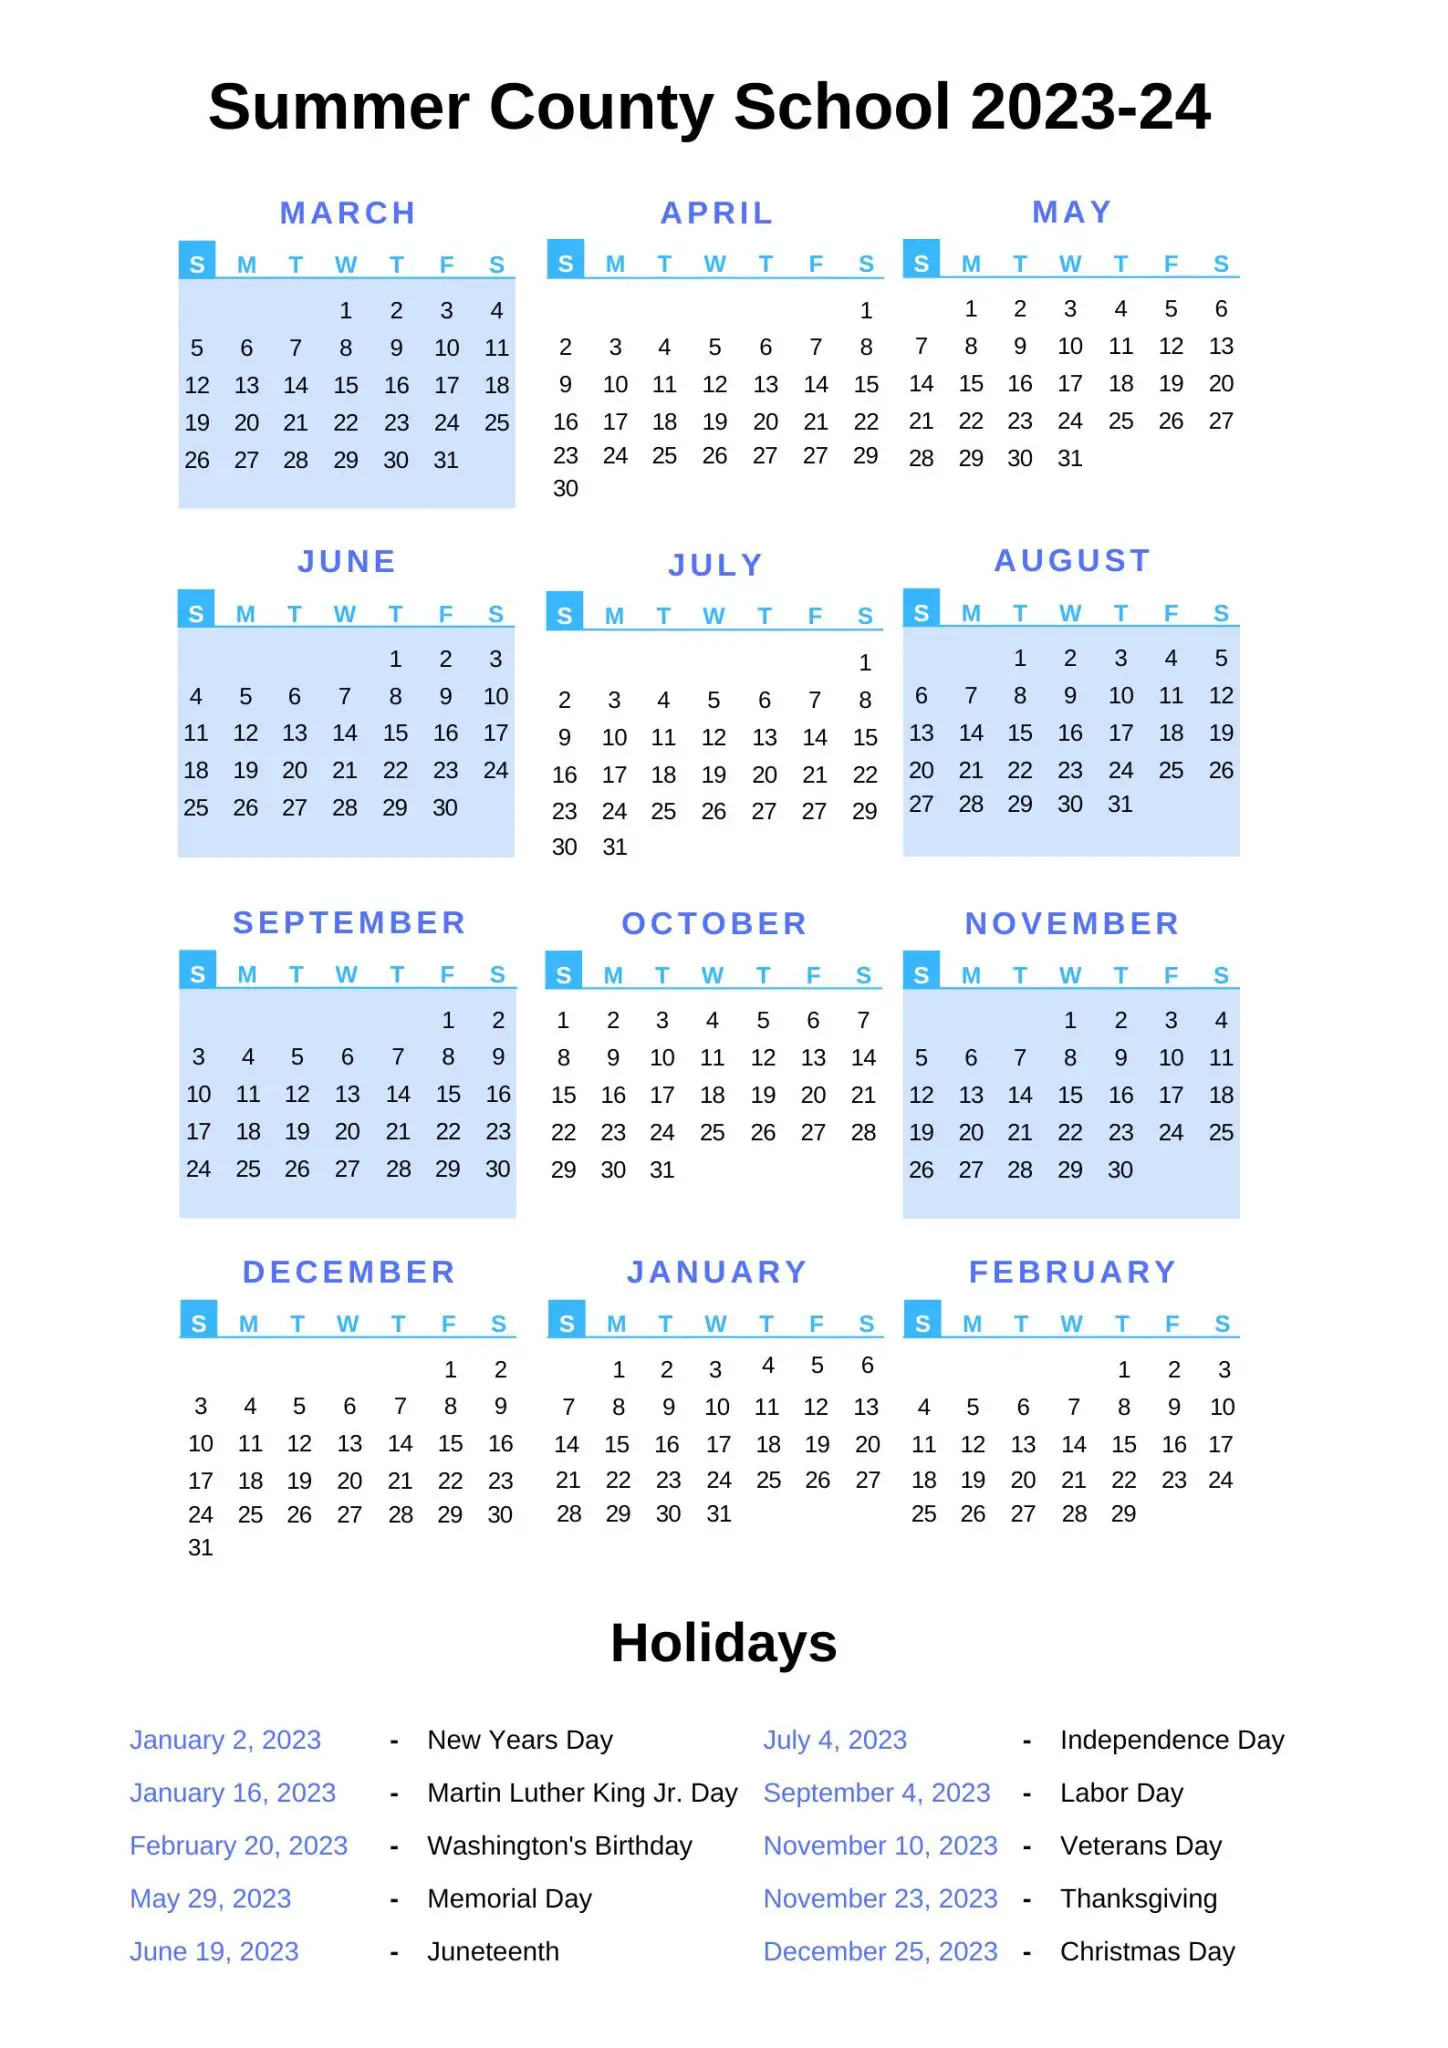 sumner-county-schools-calendar-2023-24-with-holidays